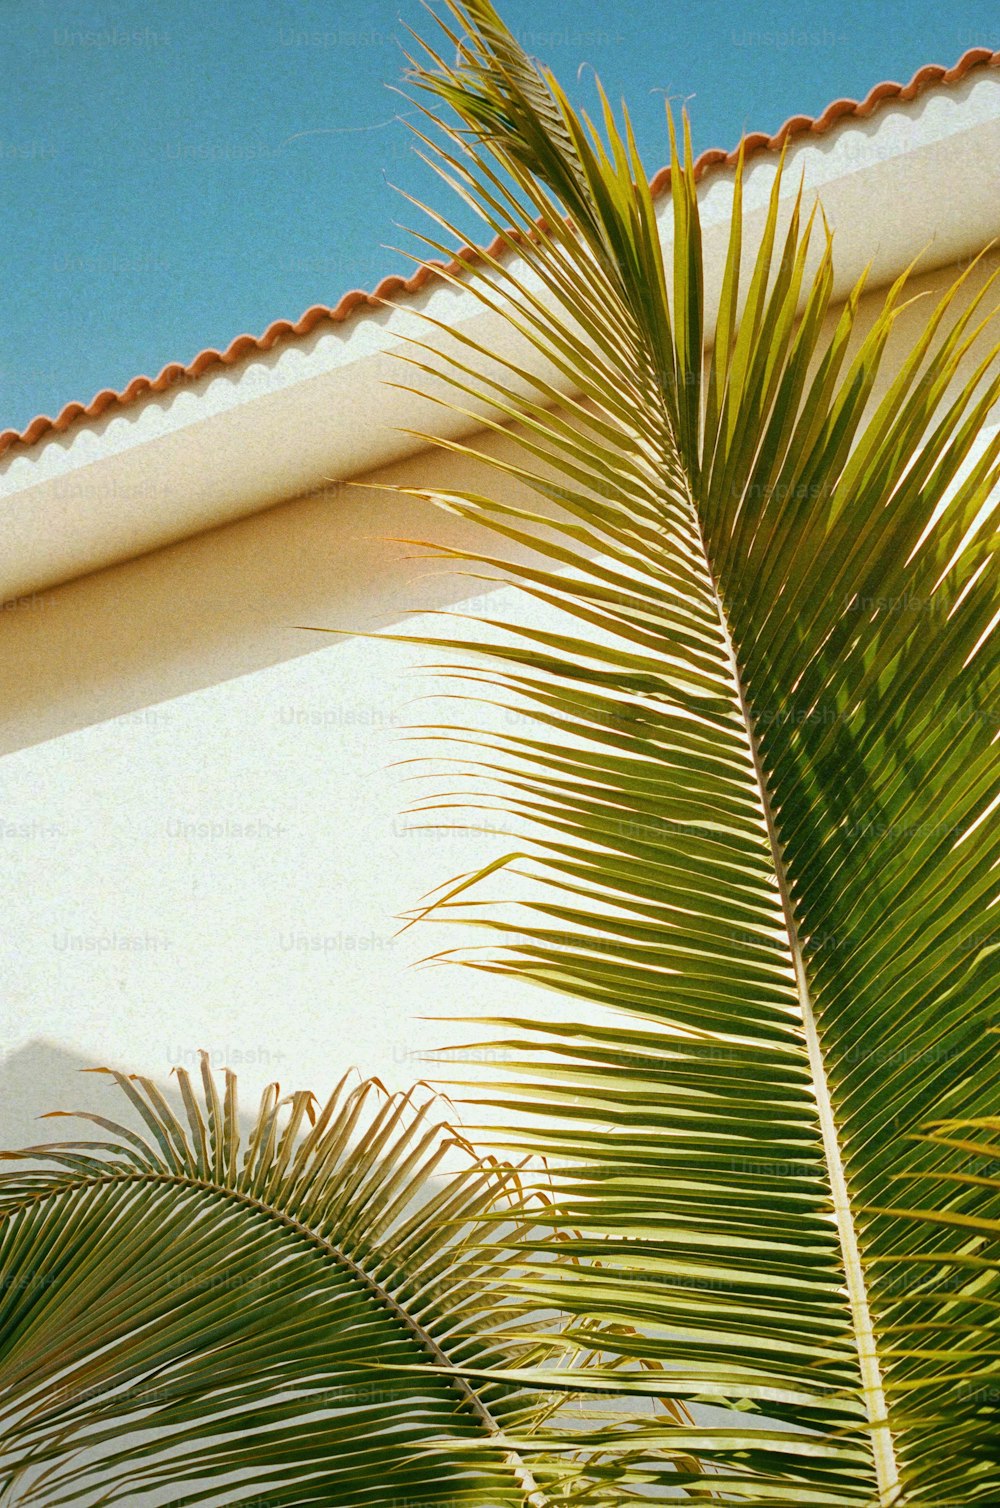 a close up of a palm tree near a building